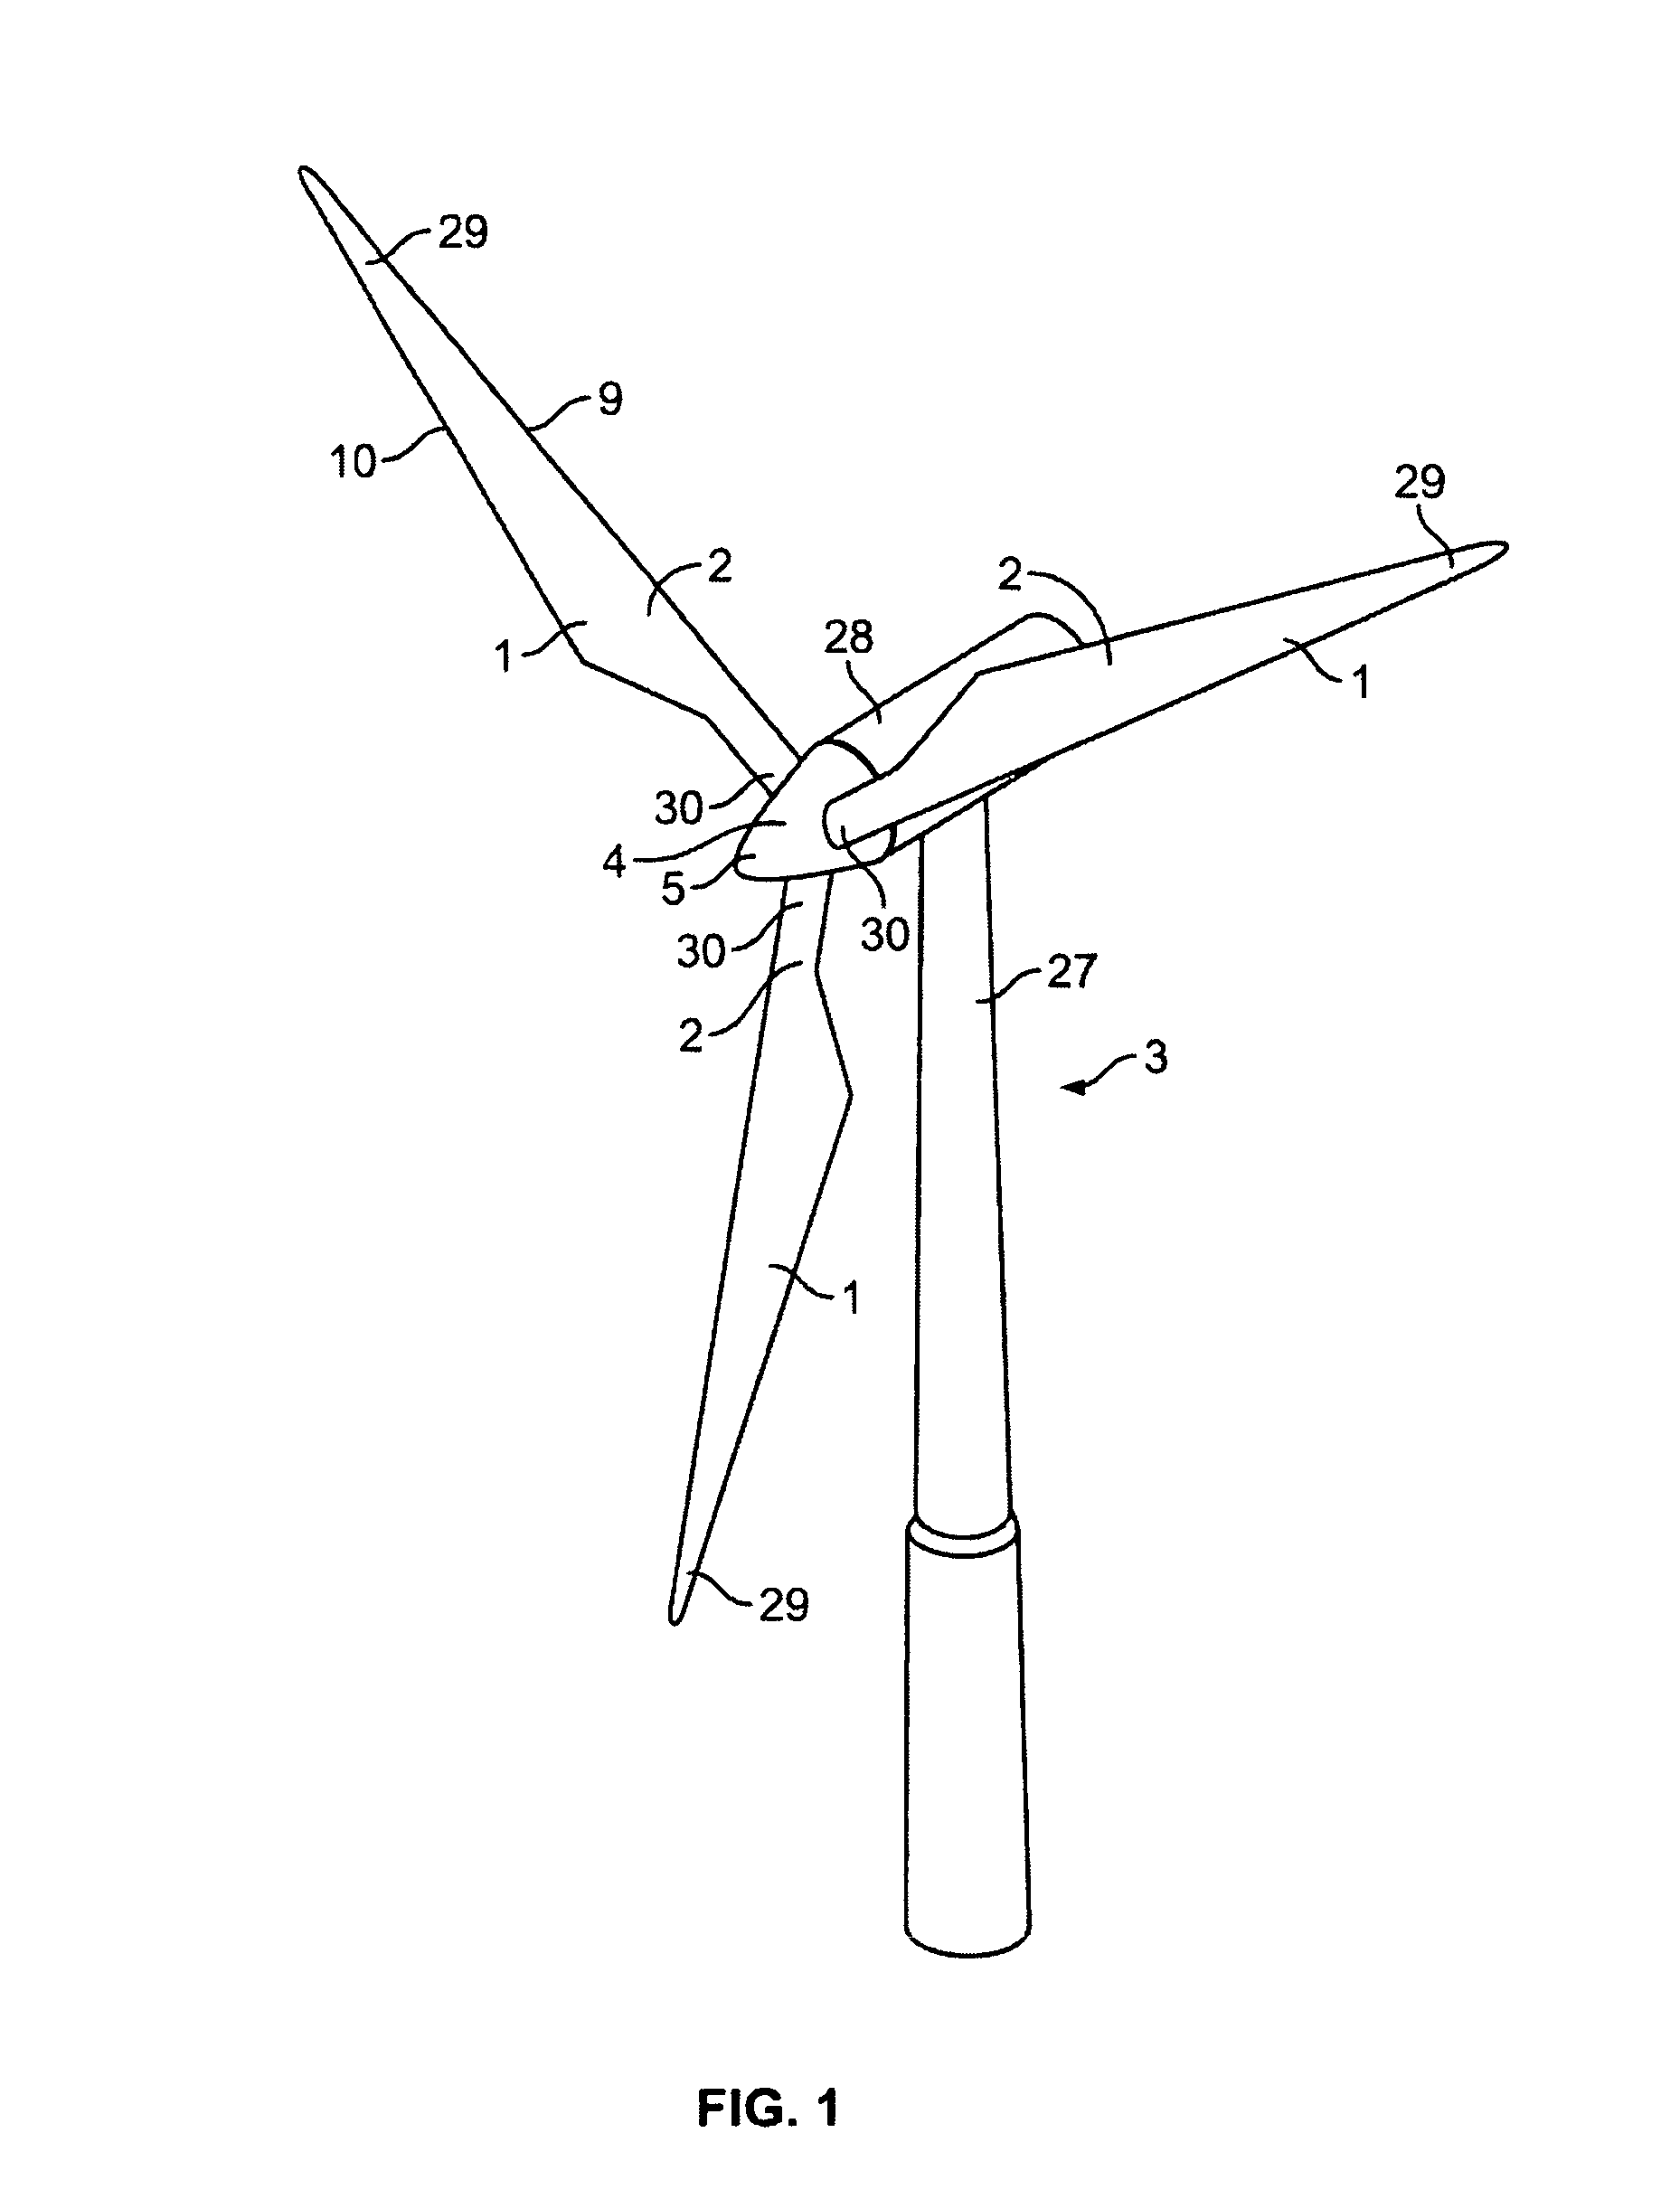 Wind turbine blade for a rotor of a wind turbine